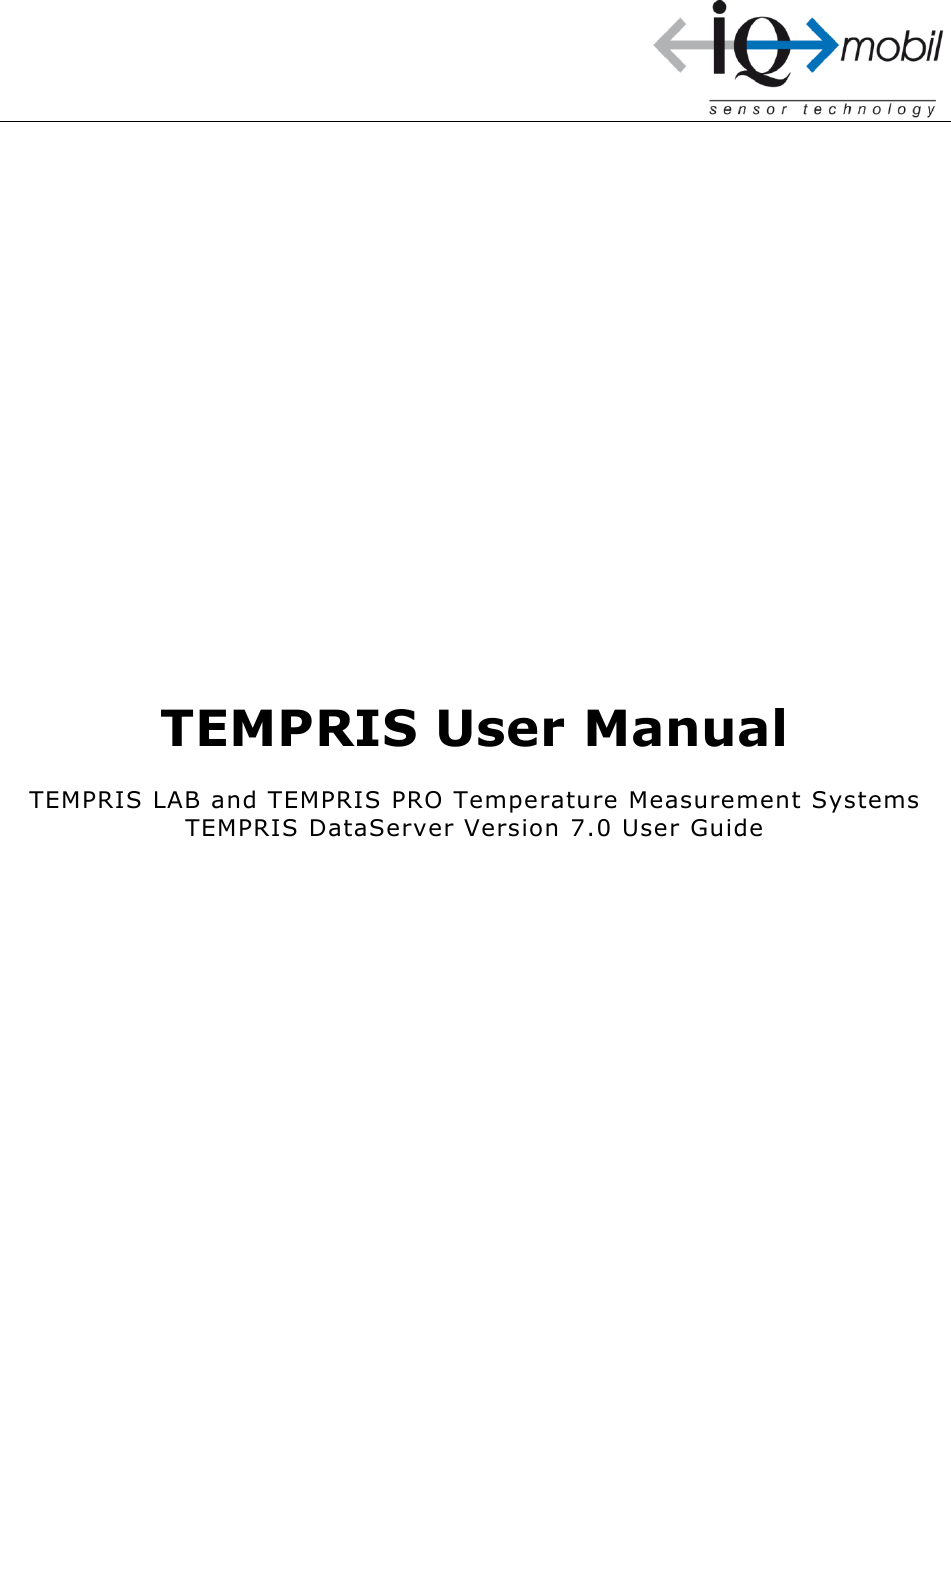               TEMPRIS User Manual TEMPRIS LAB and TEMPRIS PRO Temperature Measurement Systems TEMPRIS DataServer Version 7.0 User Guide  